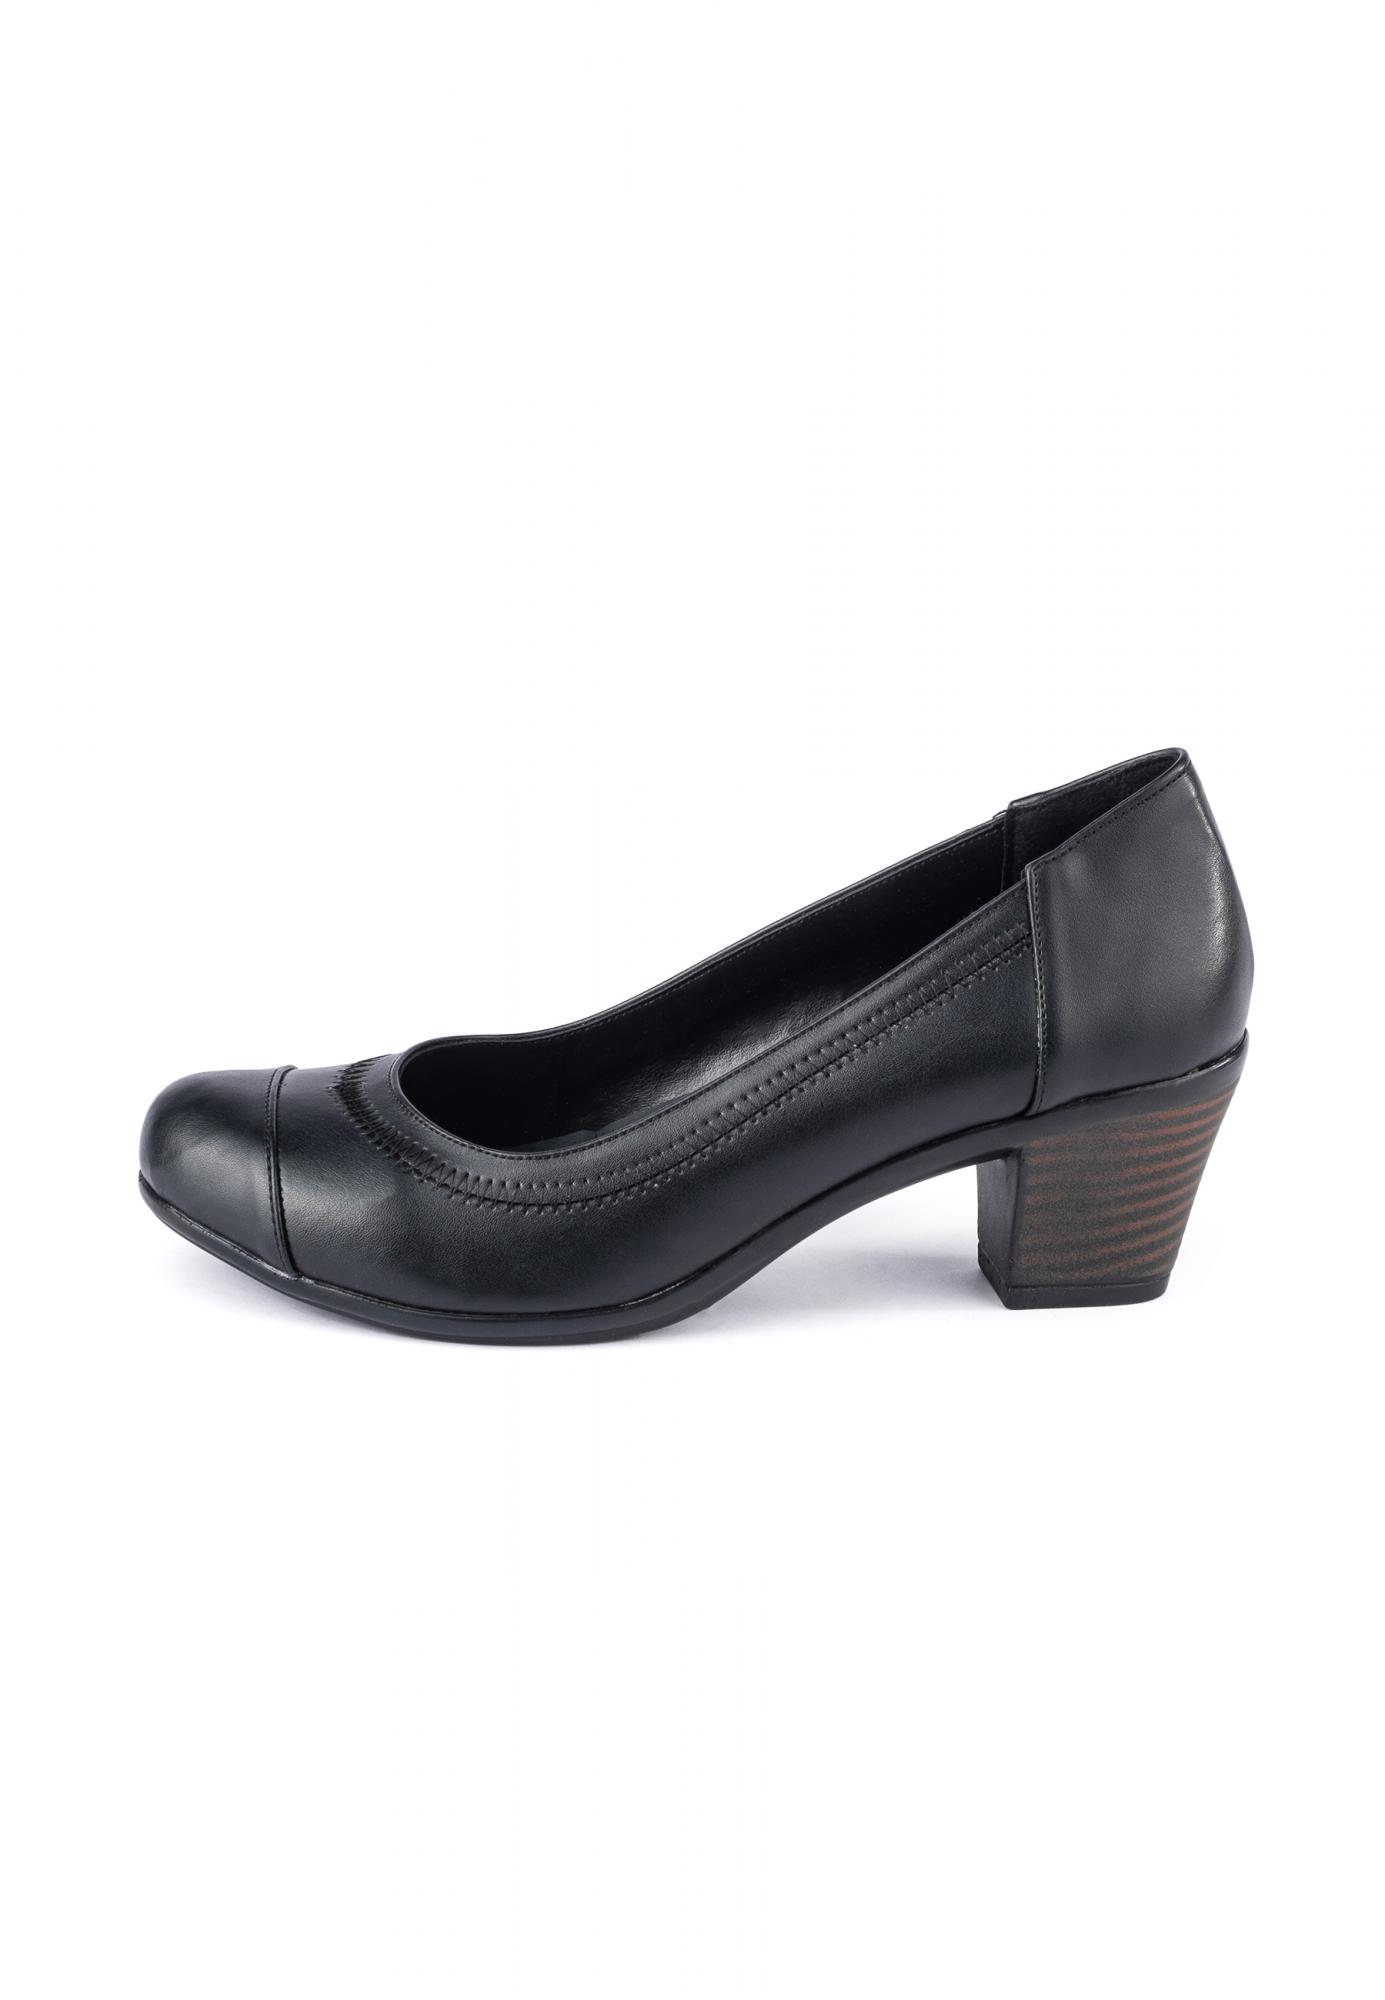 Ženske cipele D245 - CRNA